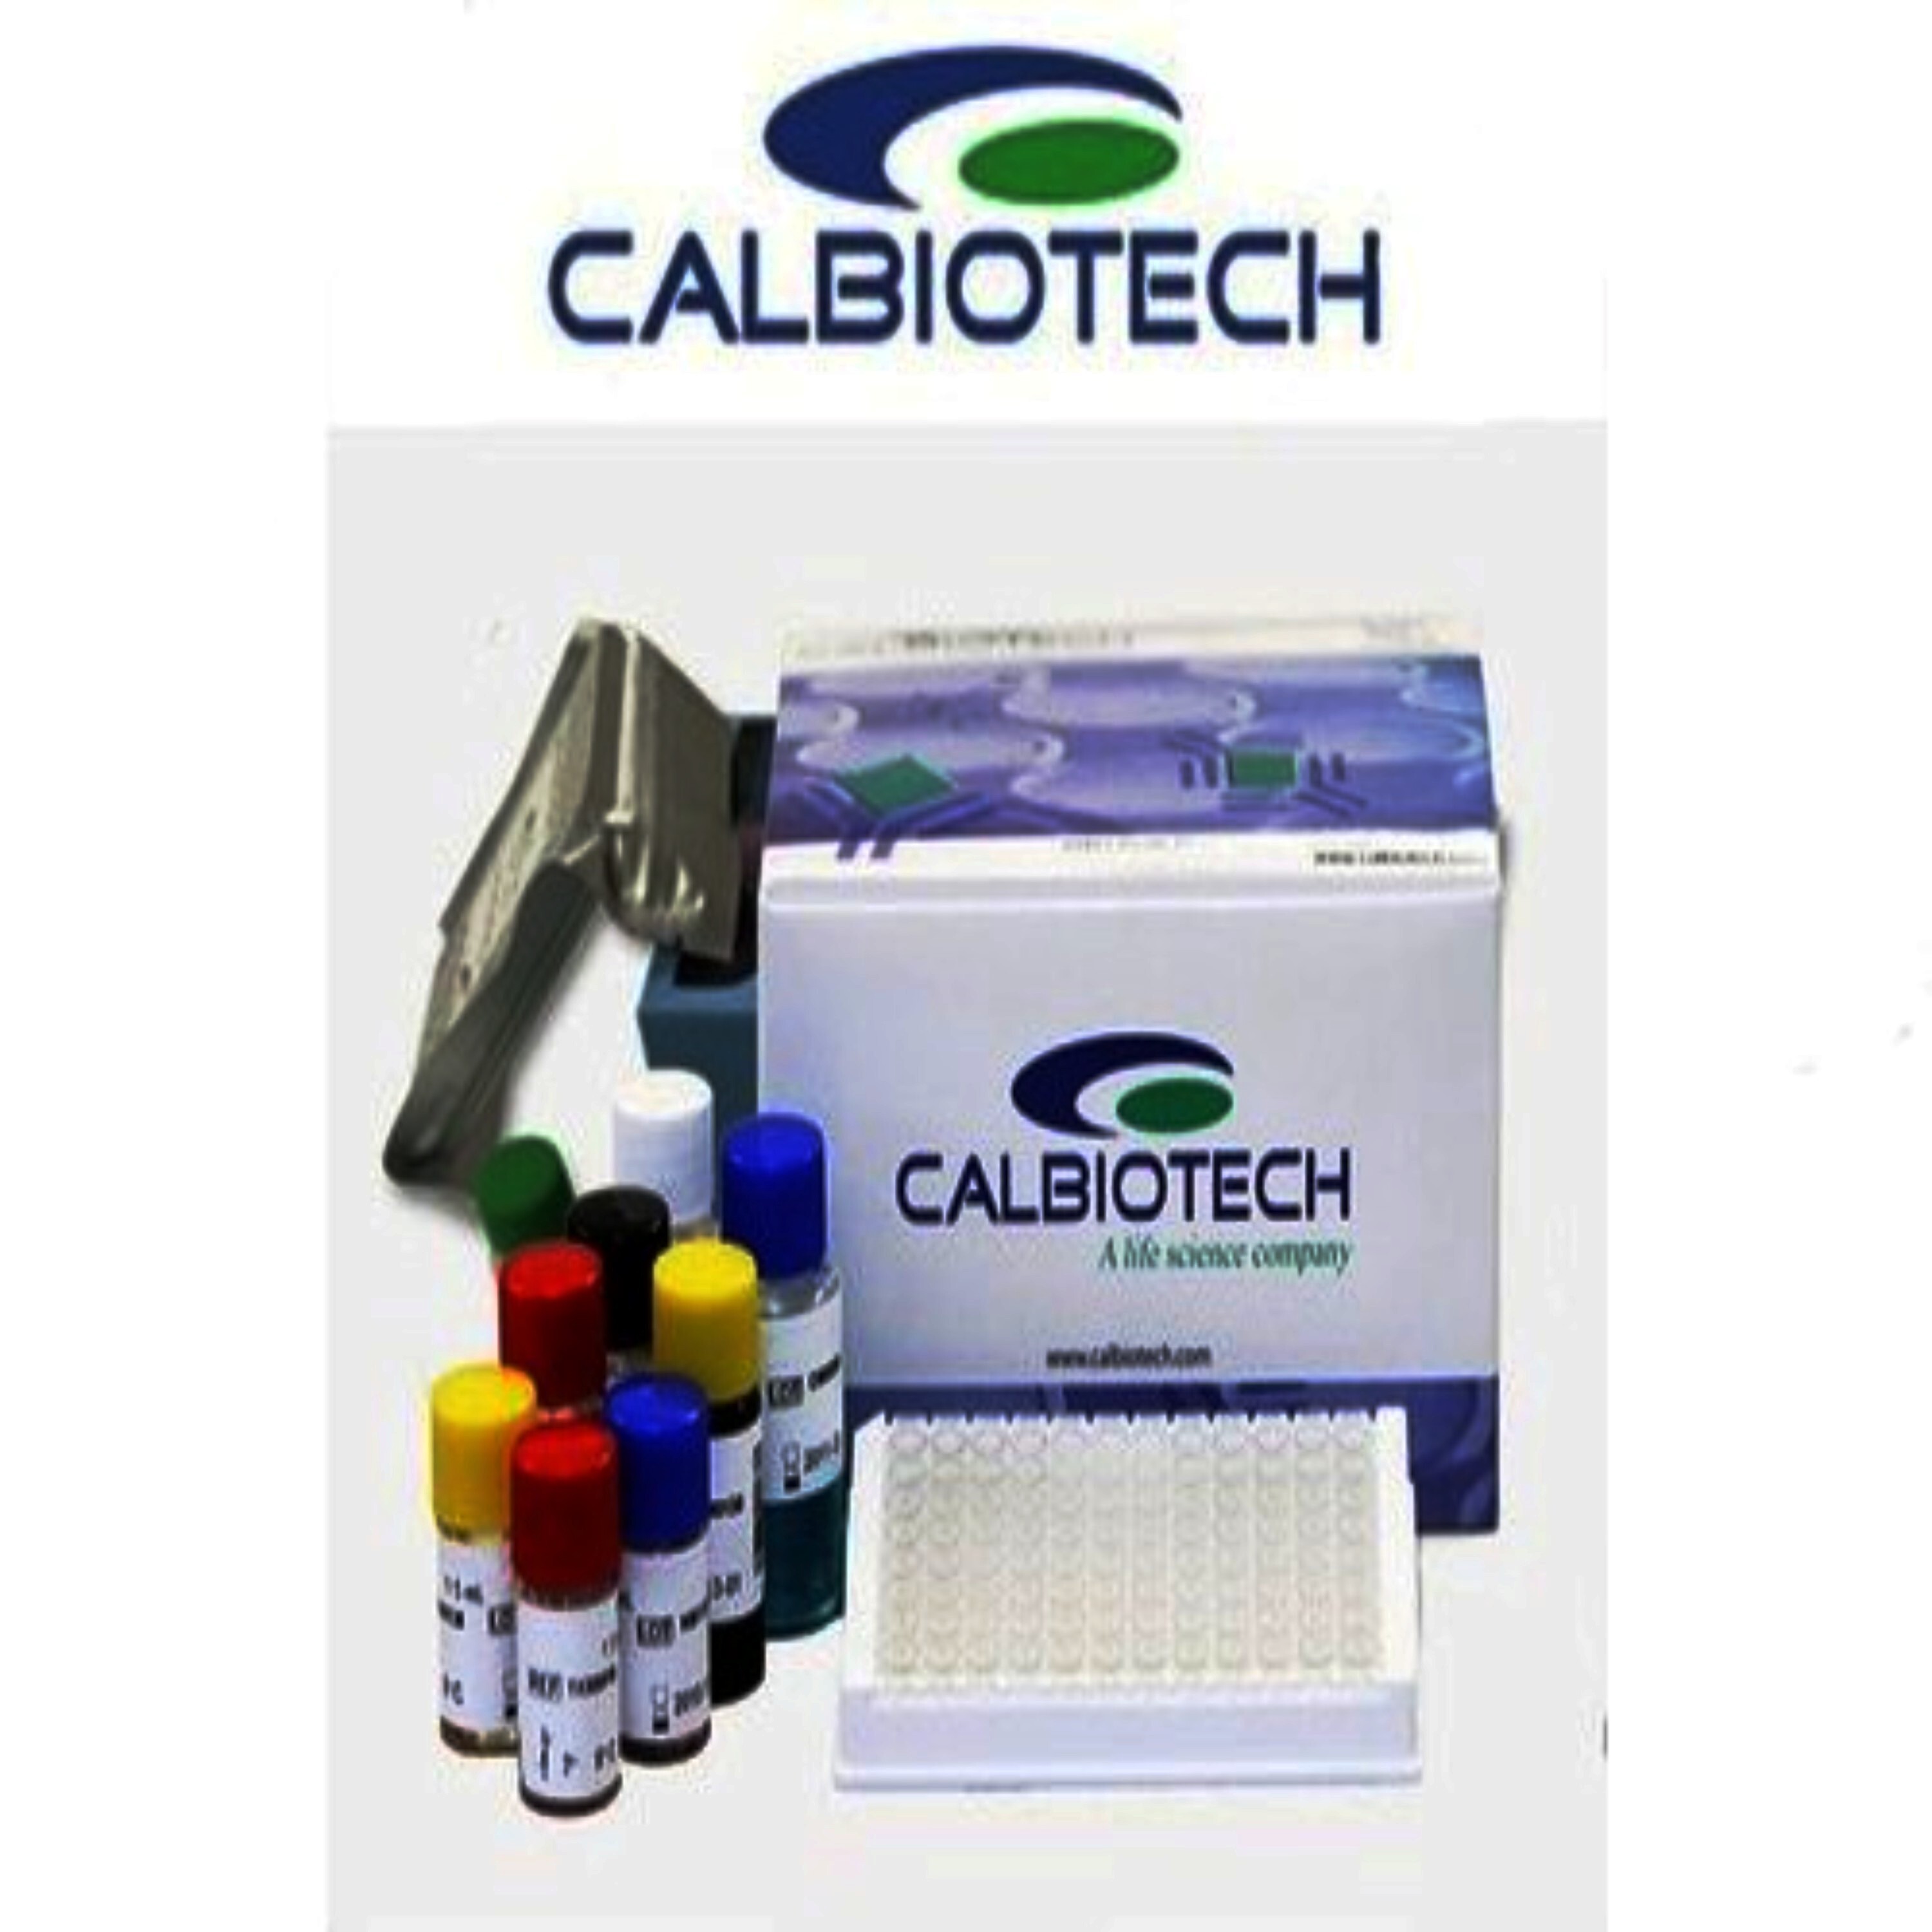 Calbiotech Vitamin B12 Elisa Kit